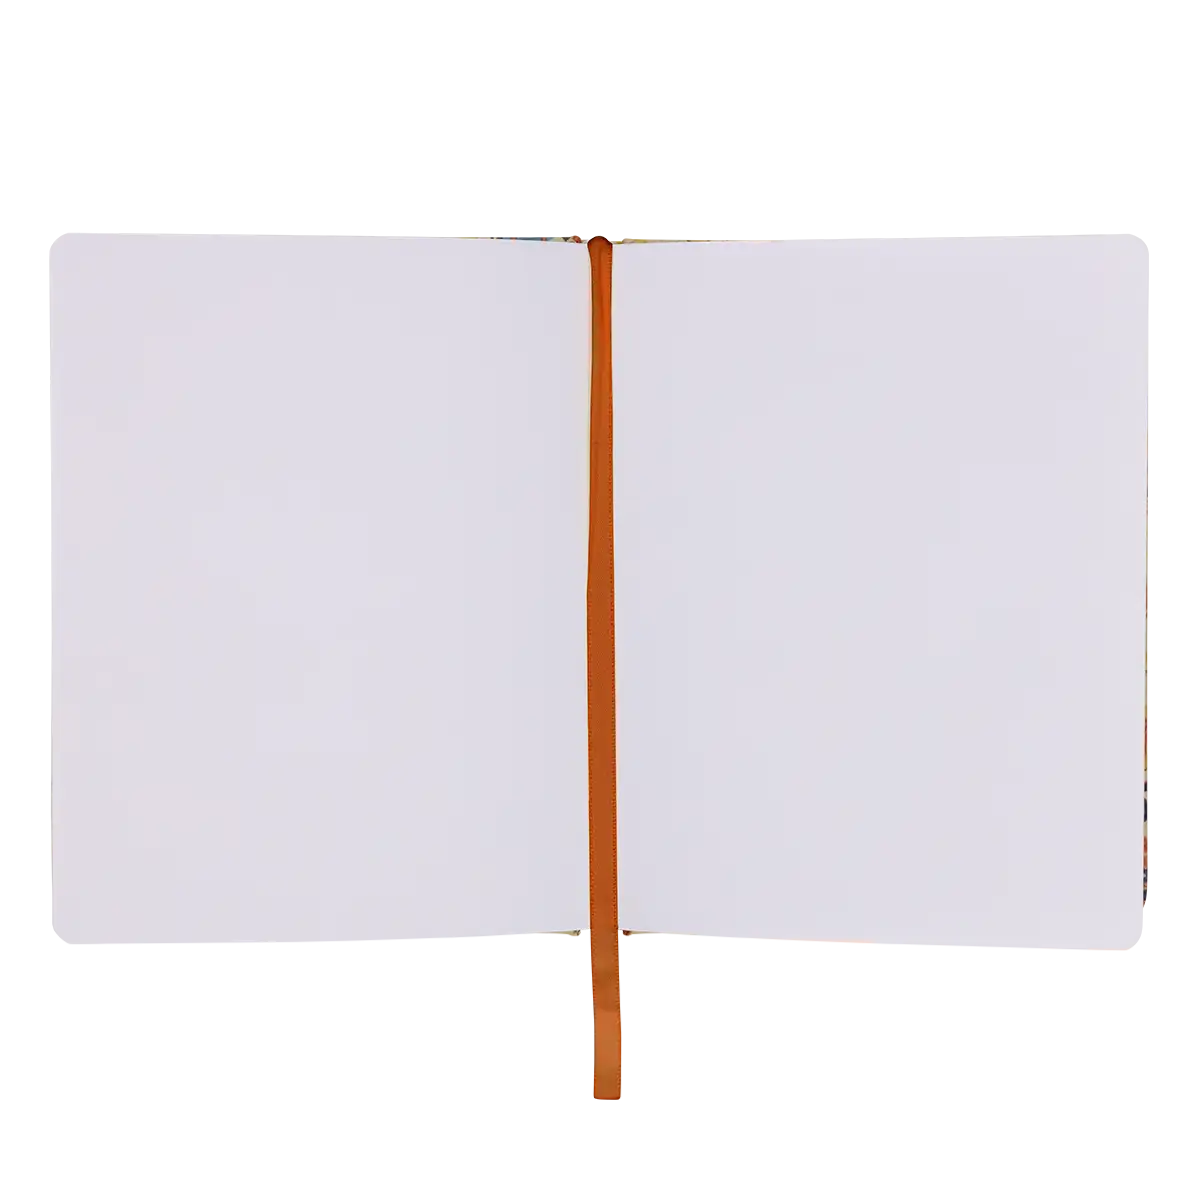 Crash Bandicoot Notebook "Racer" Image 3